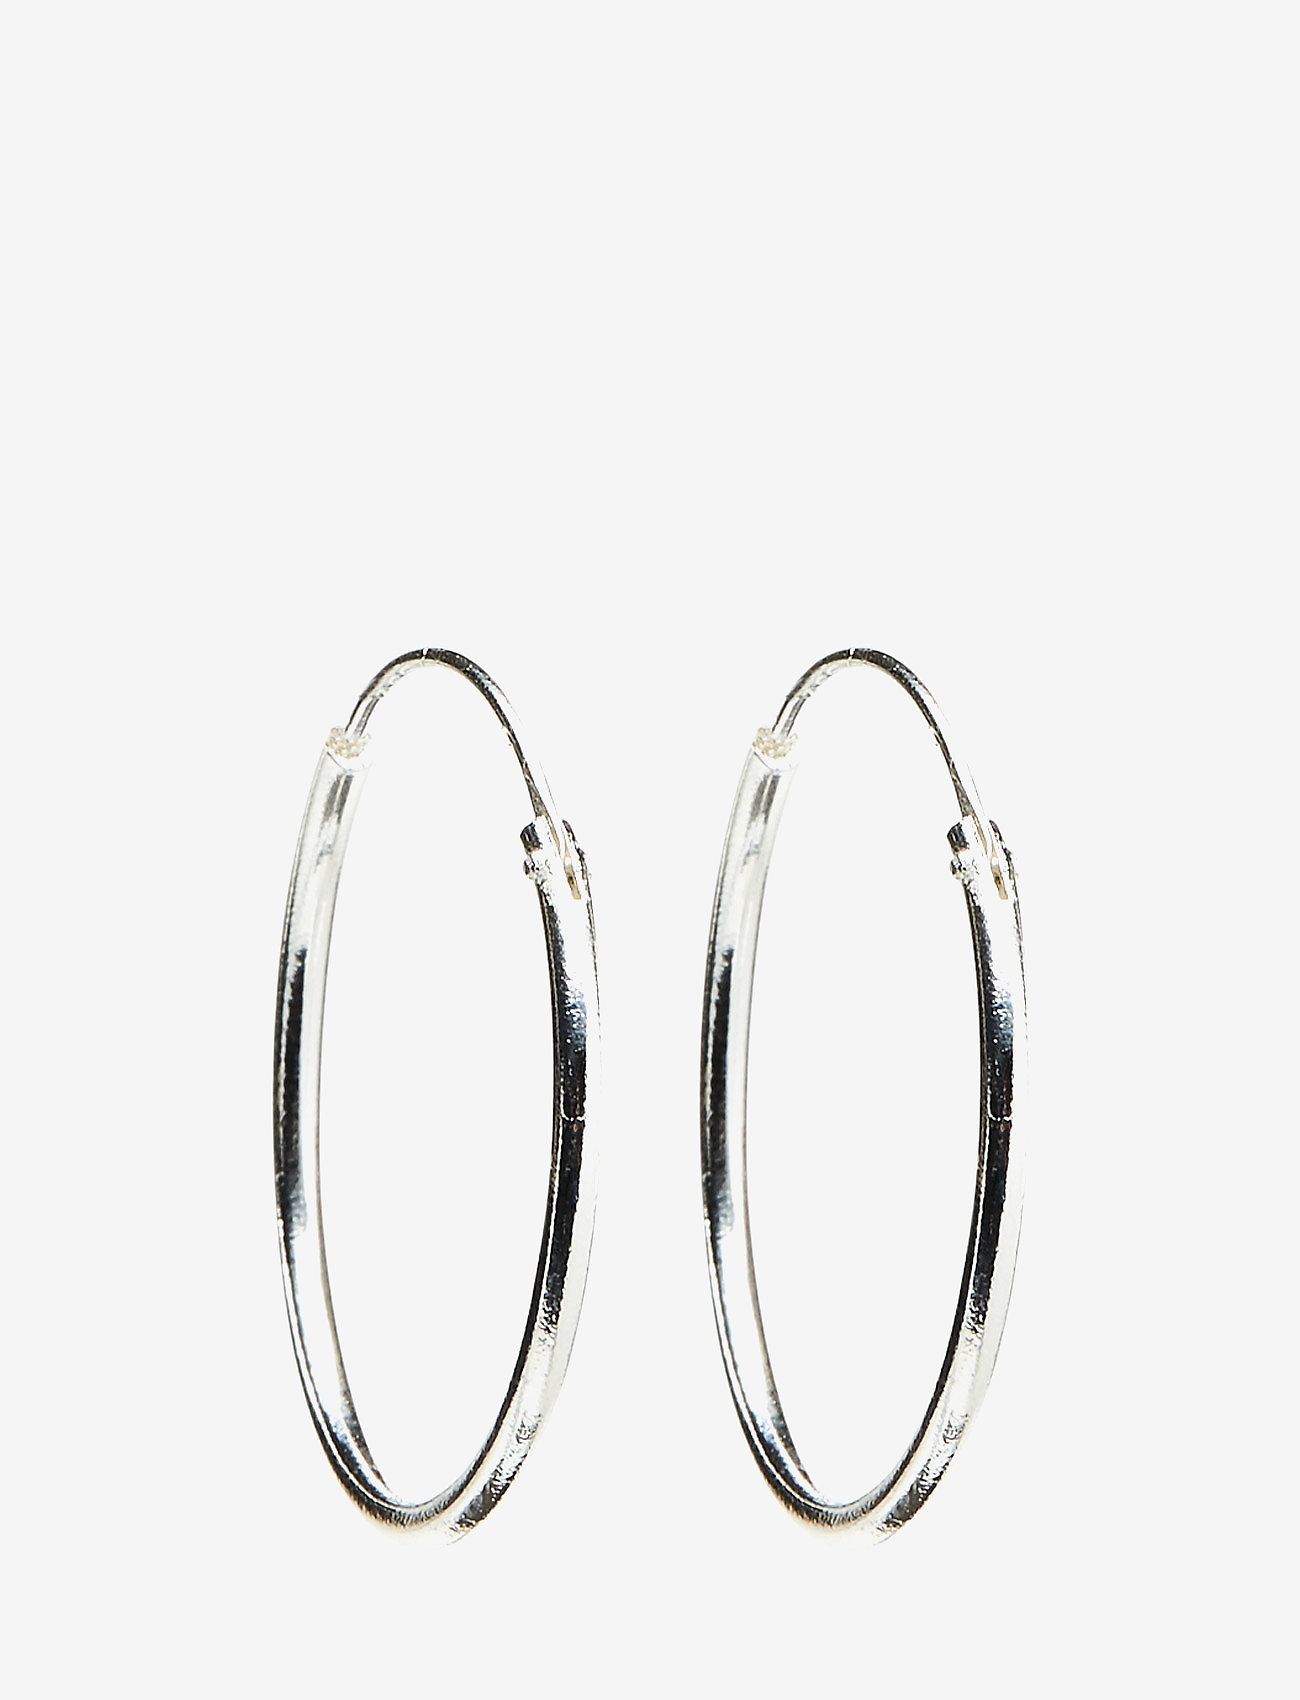 Pilgrim - SANNE small hoop earrings silver-plated - silver plated - 0